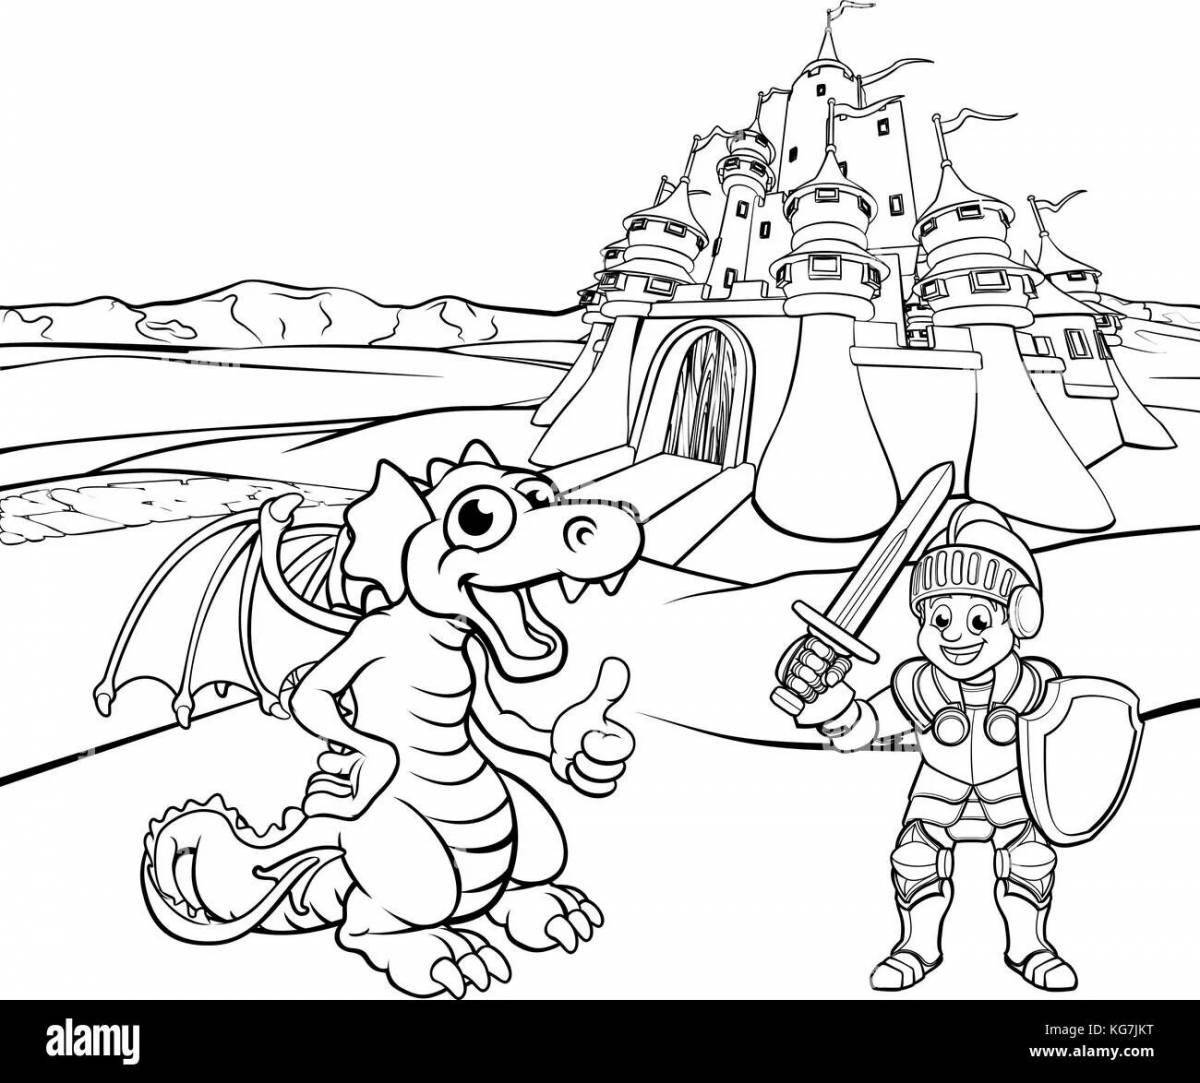 Royal knight and dragon coloring page